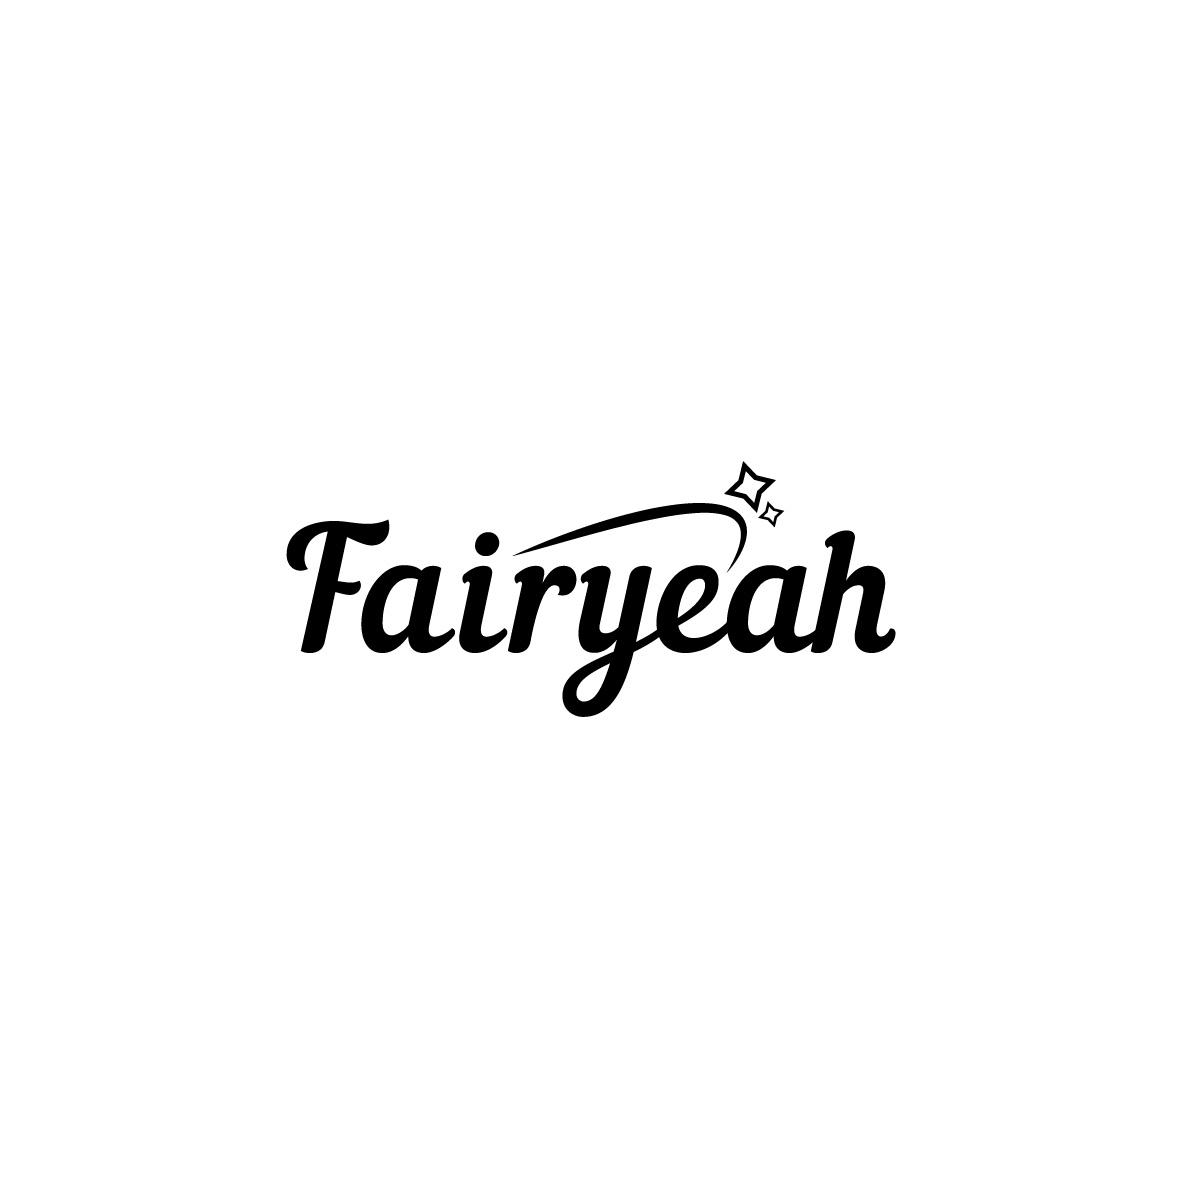 FAIRYEAH